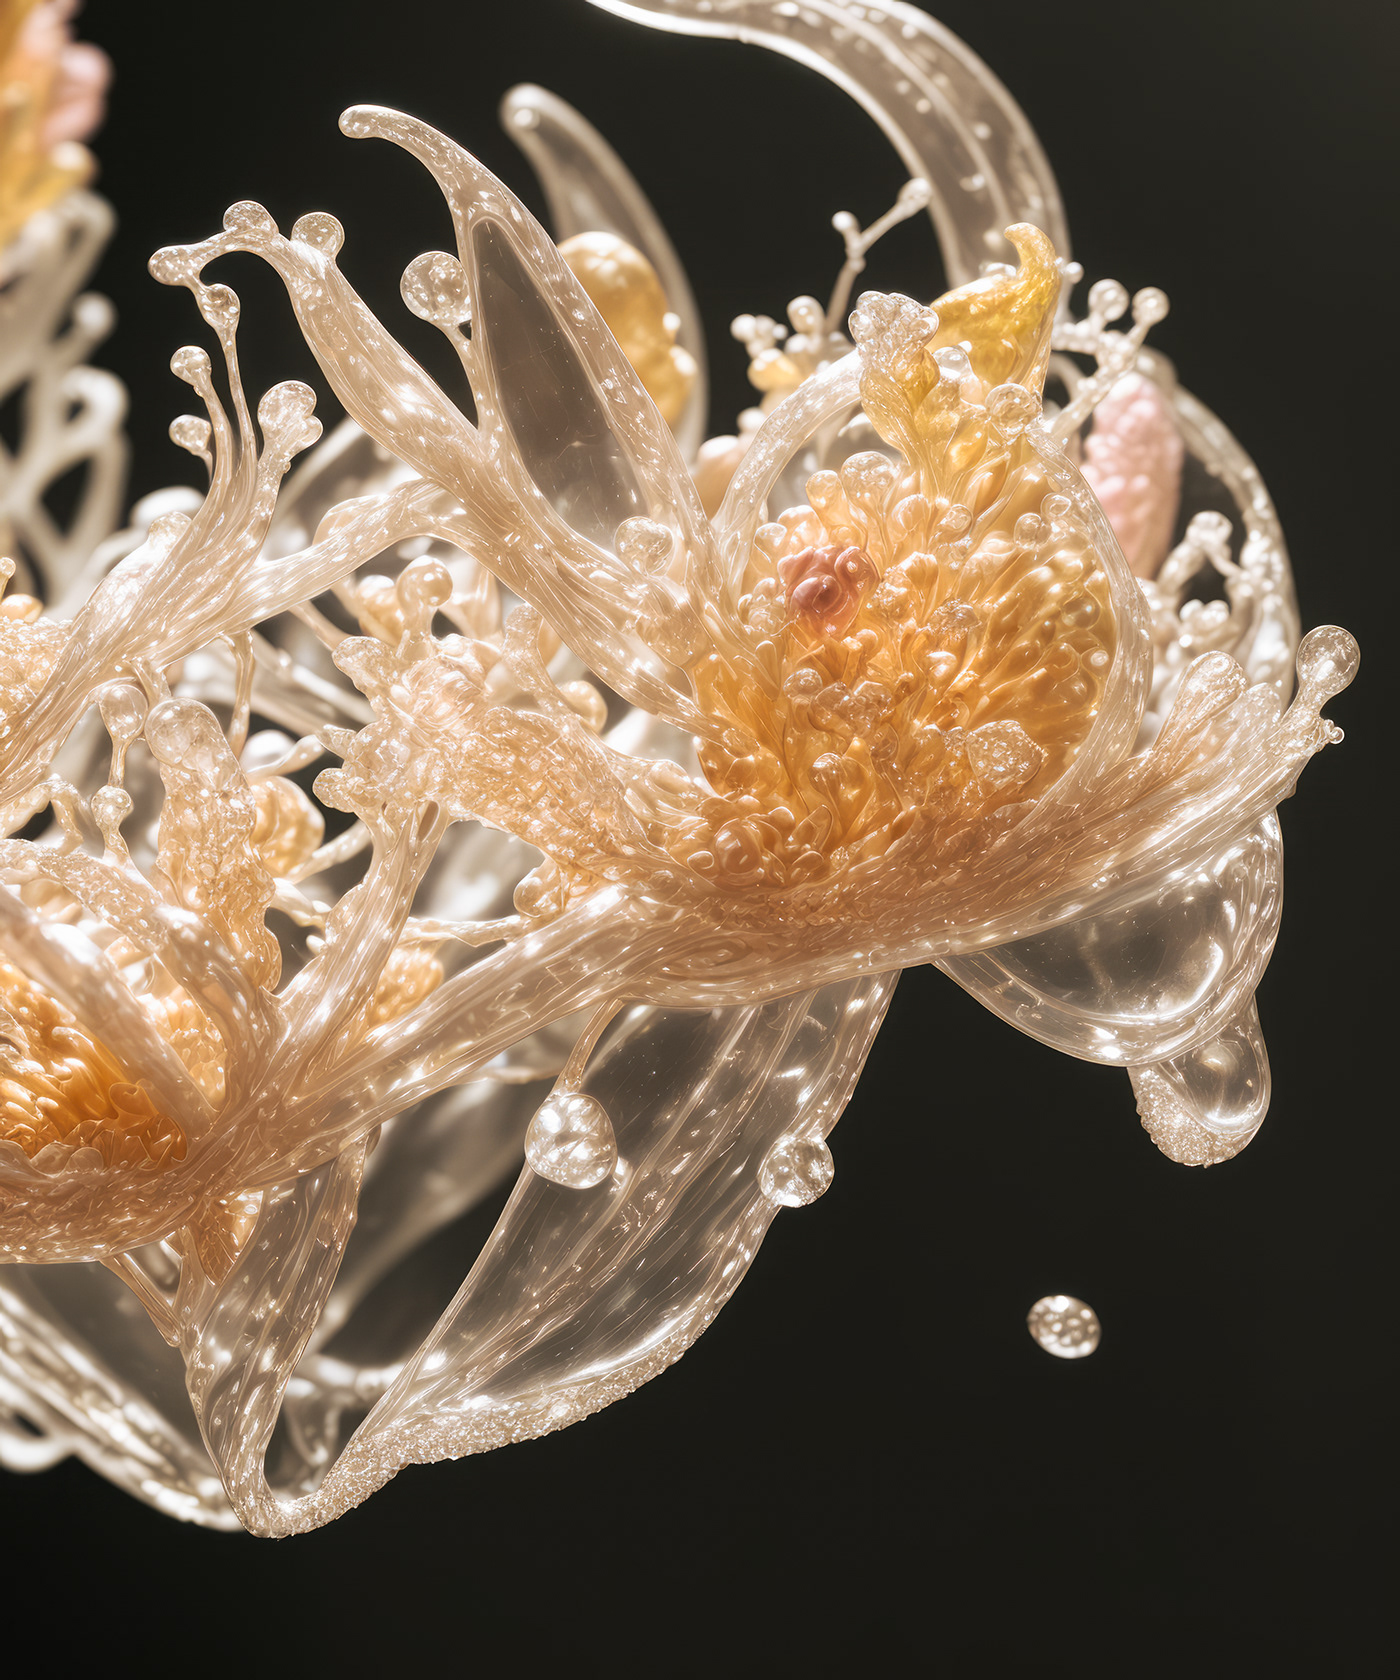 digital  art science glass sea Ocean 3D ai animation  art contemporaryart